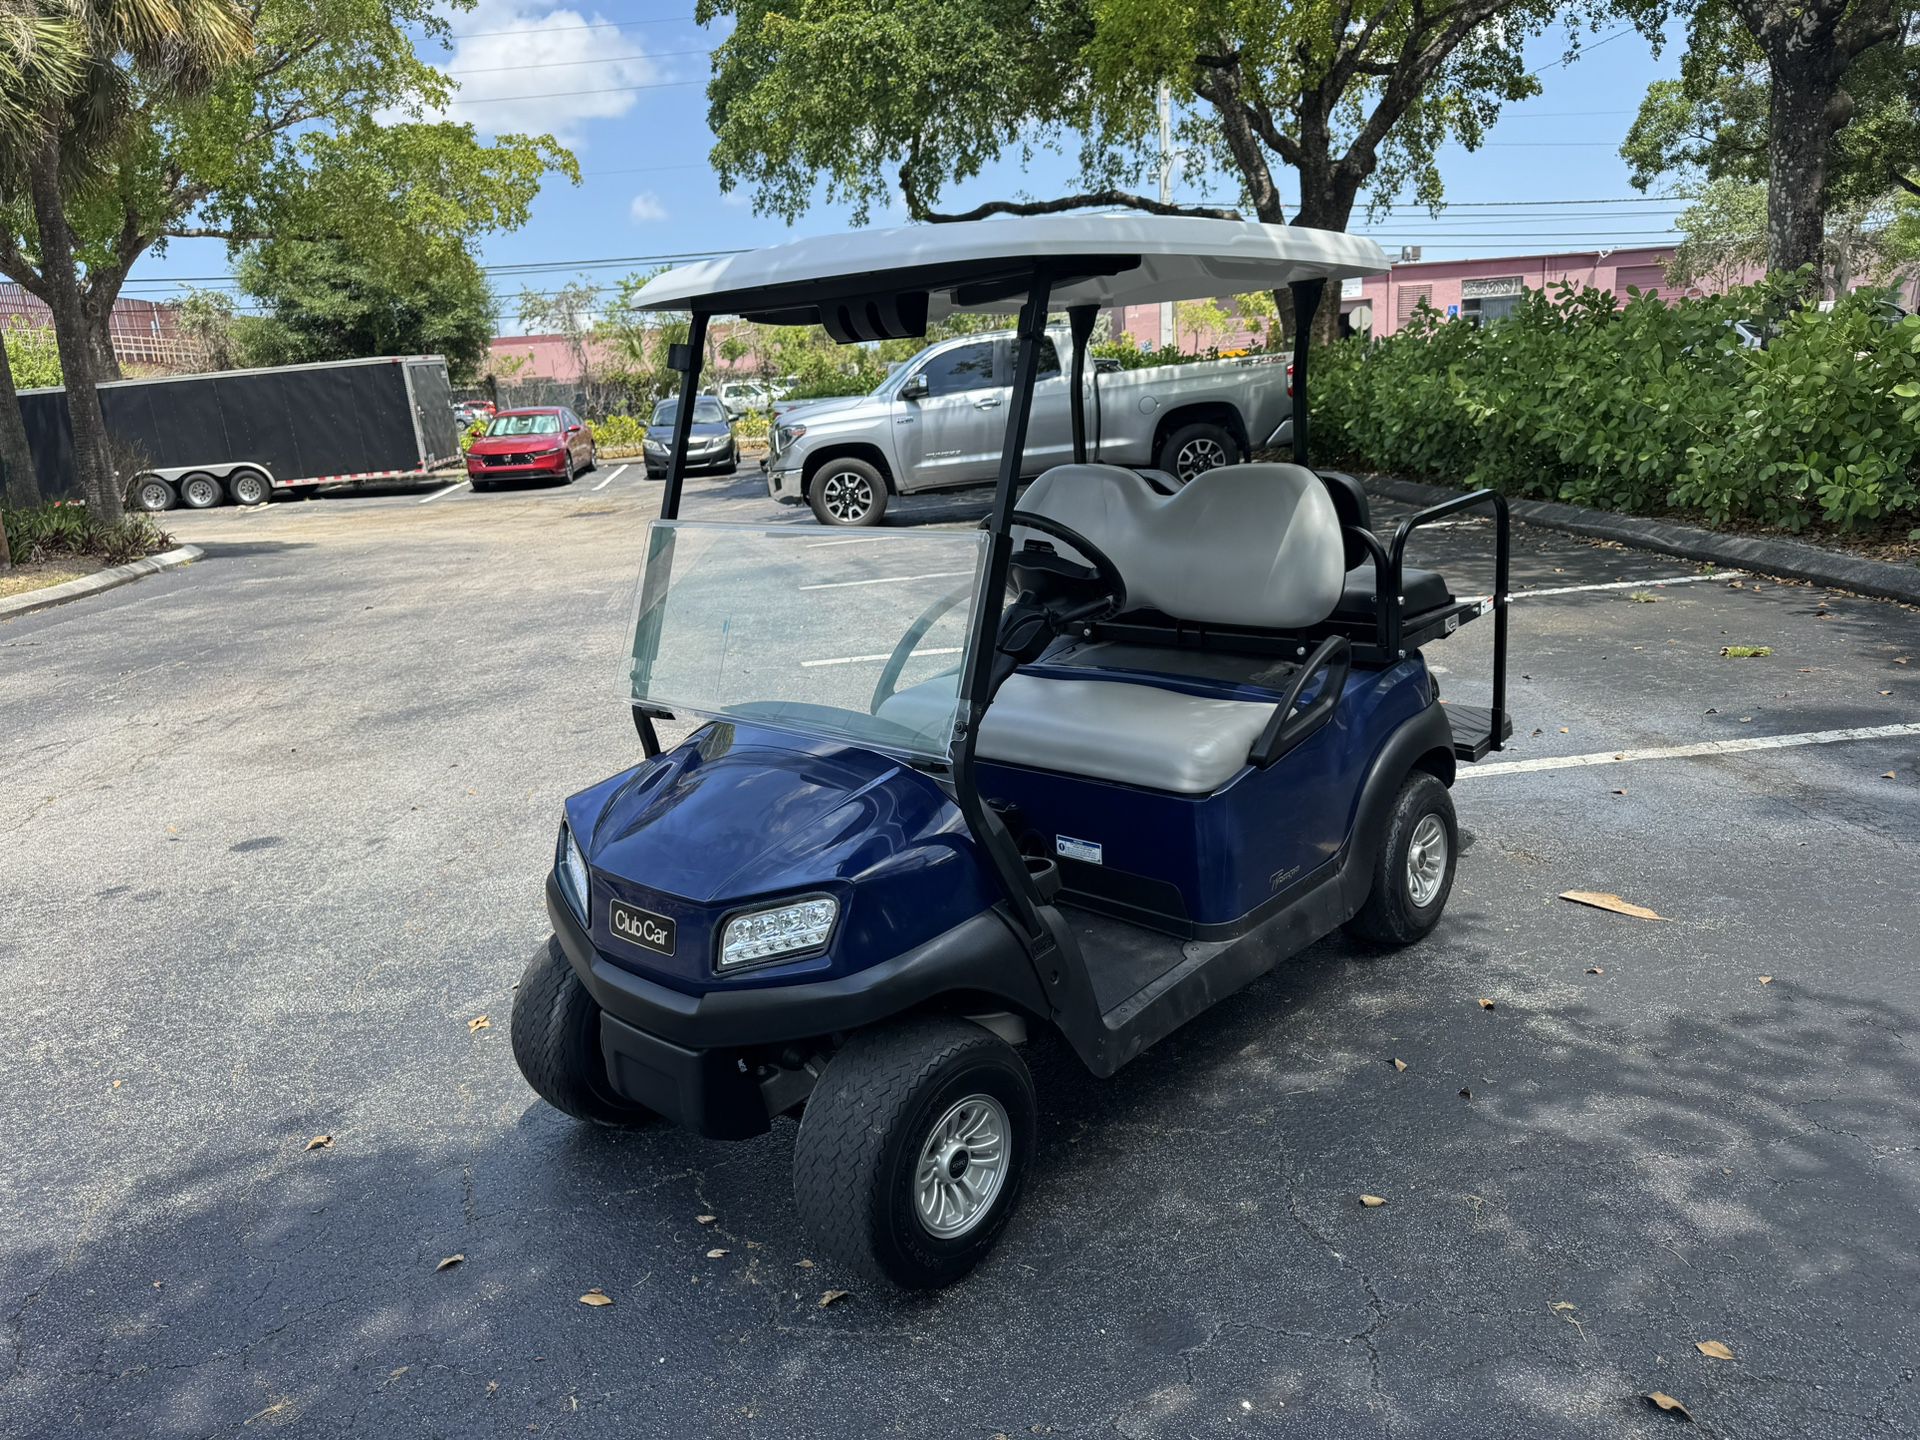 2020 4 Passenger Golf Cart Club Car Led Street Legal Light Kit 